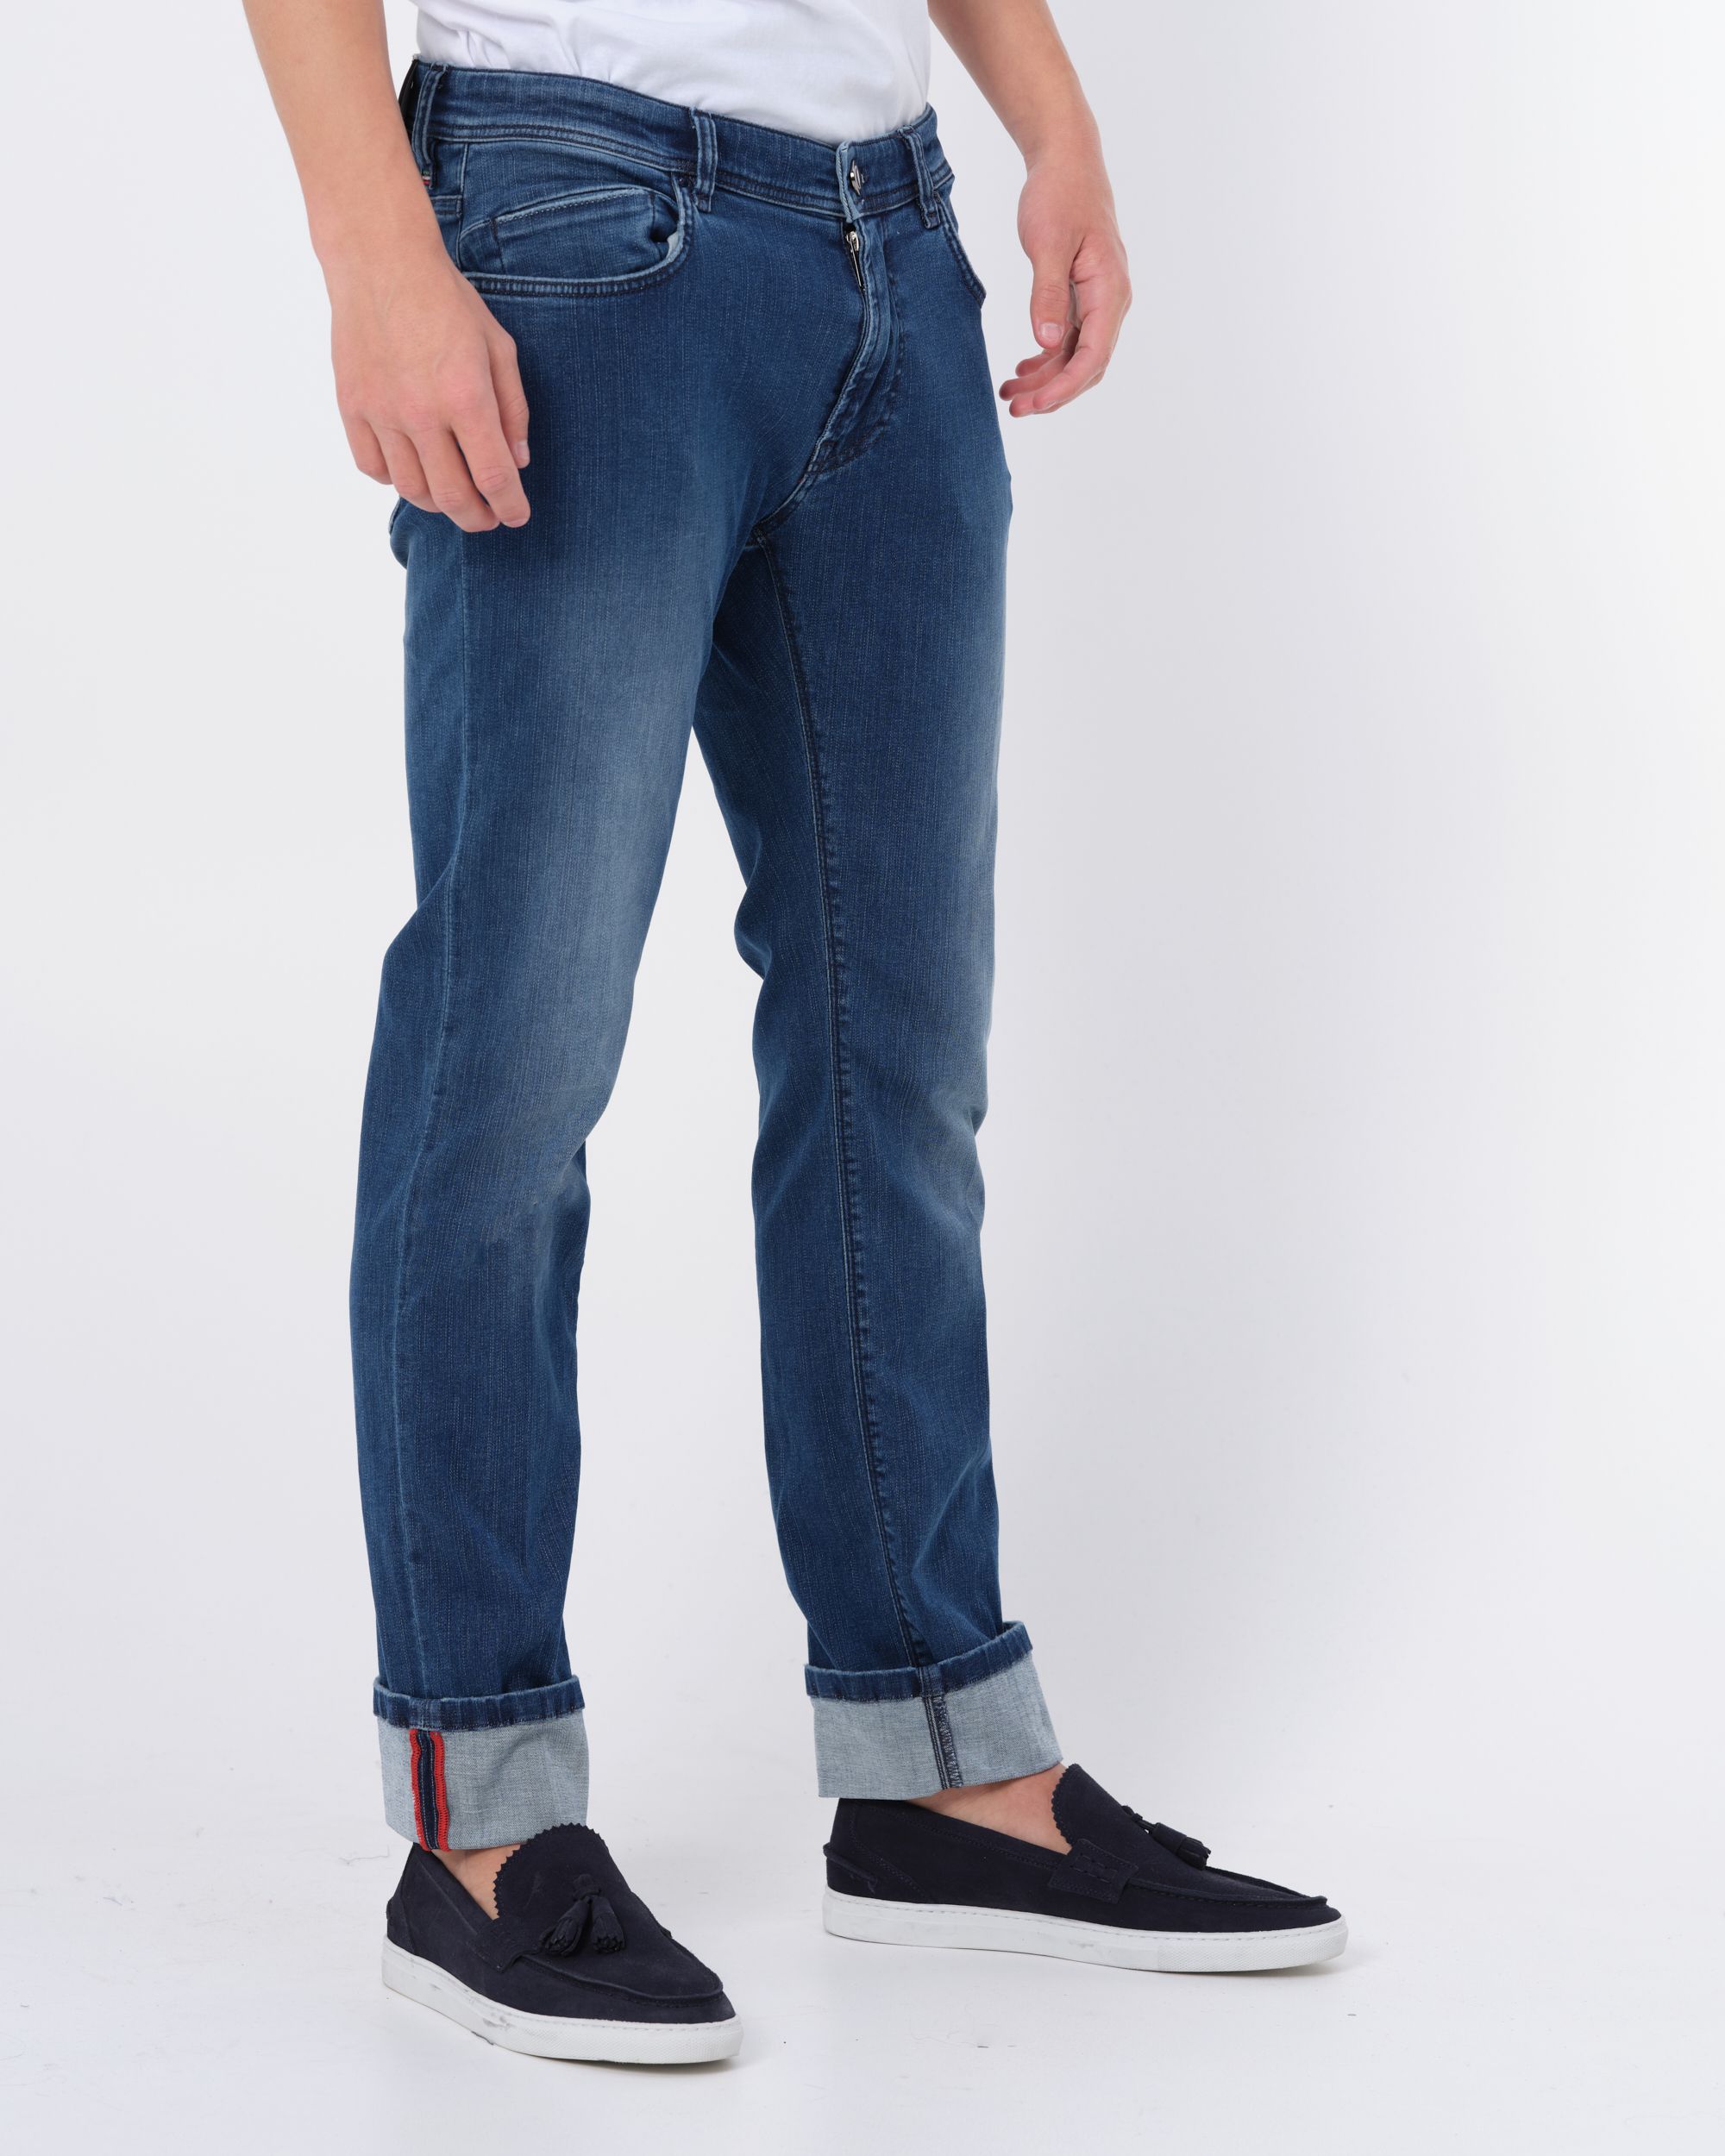 Mason's Jeans Donker blauw 083825-001-31